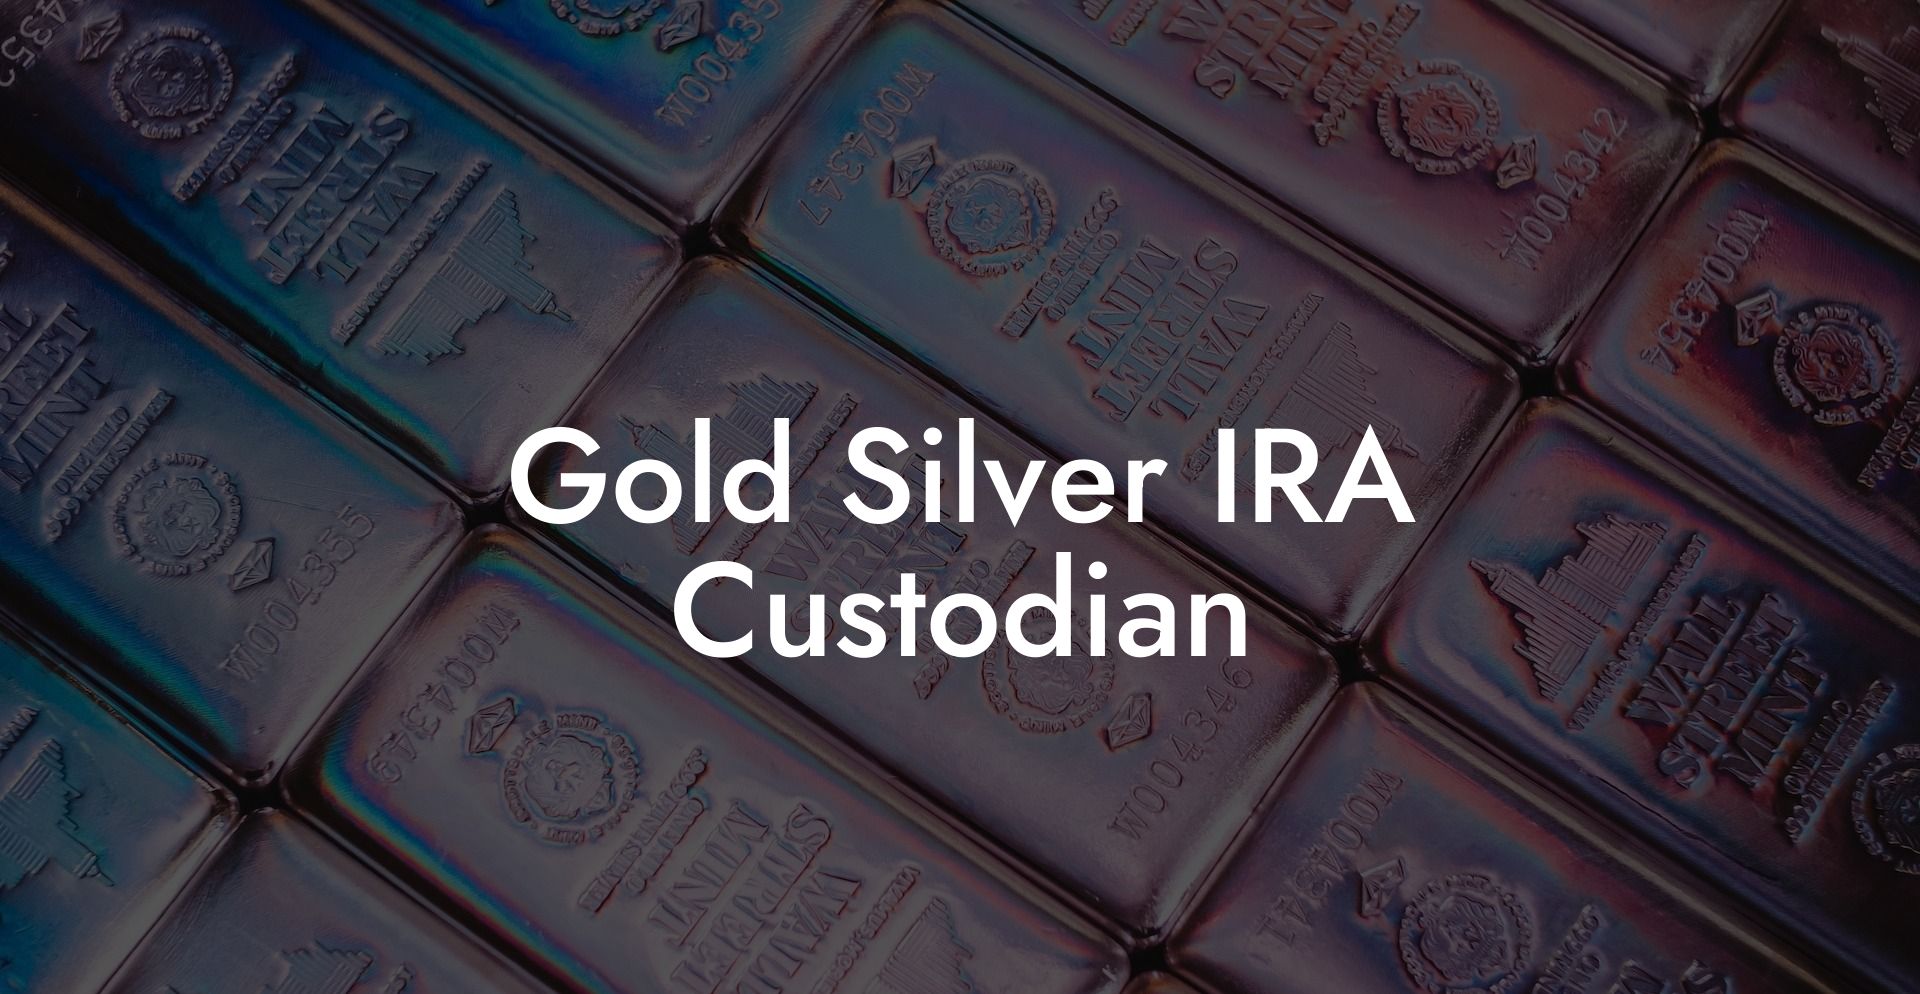 Gold Silver IRA Custodian